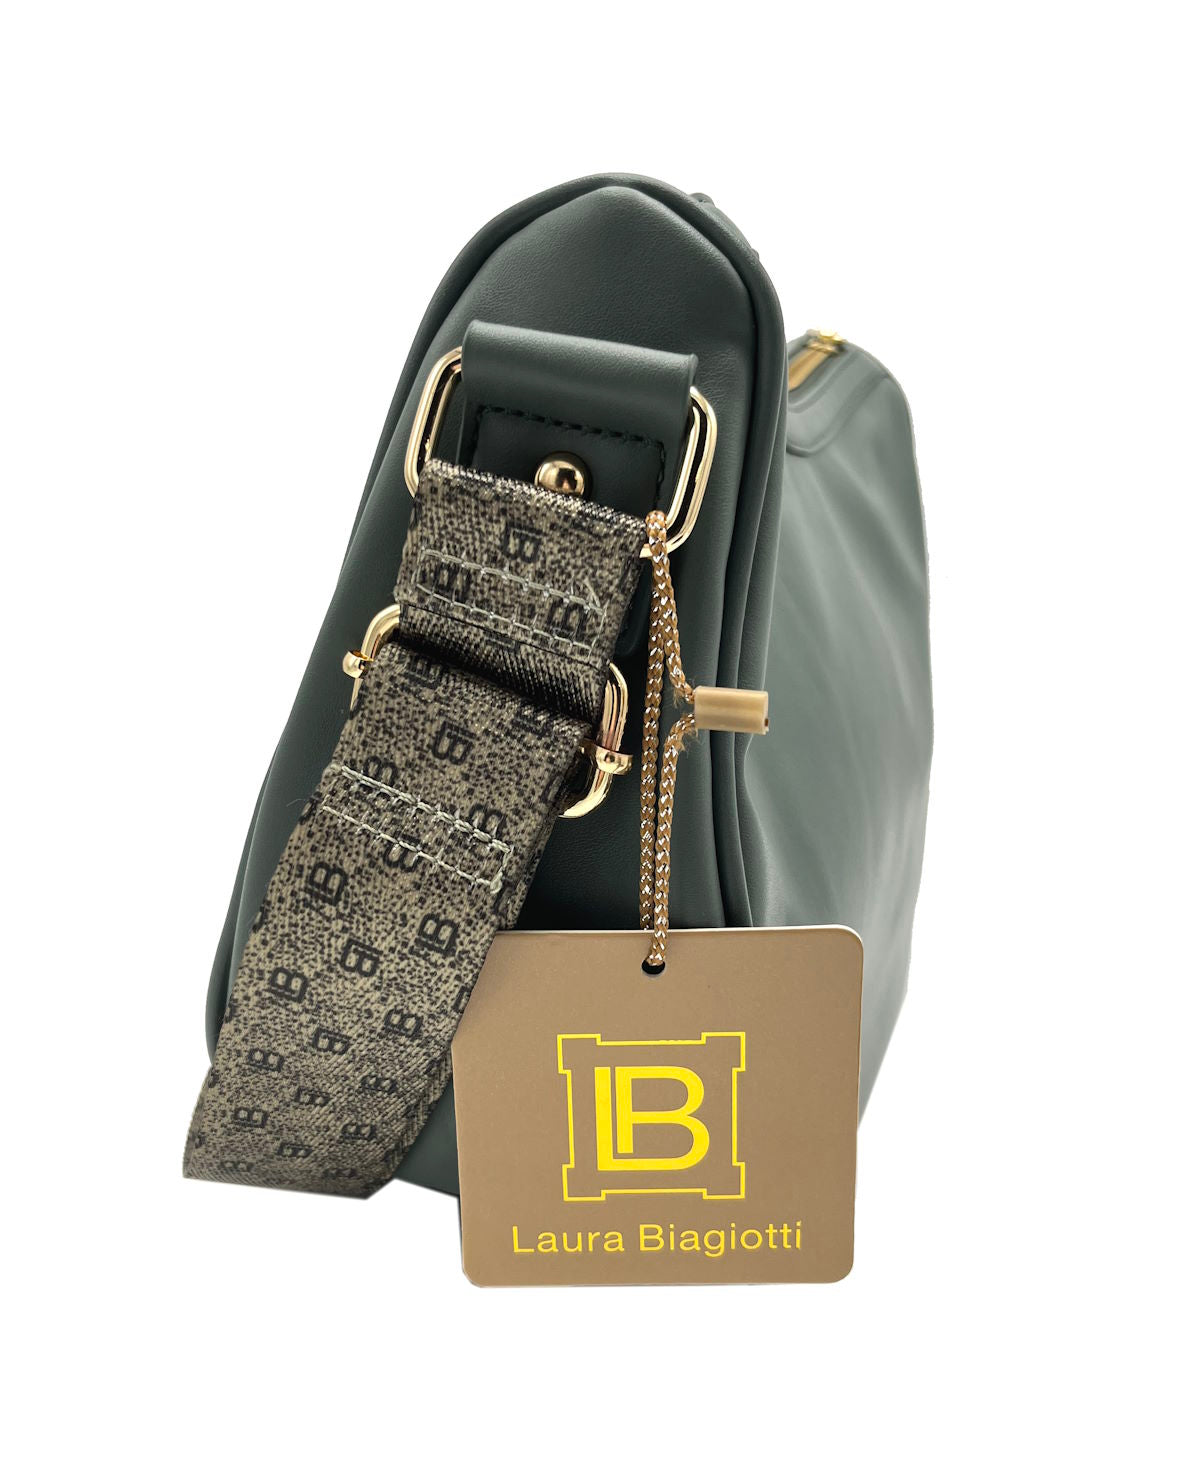 Eco leather shoulder bag, brand Laura Biagiotti, art. LB106-1